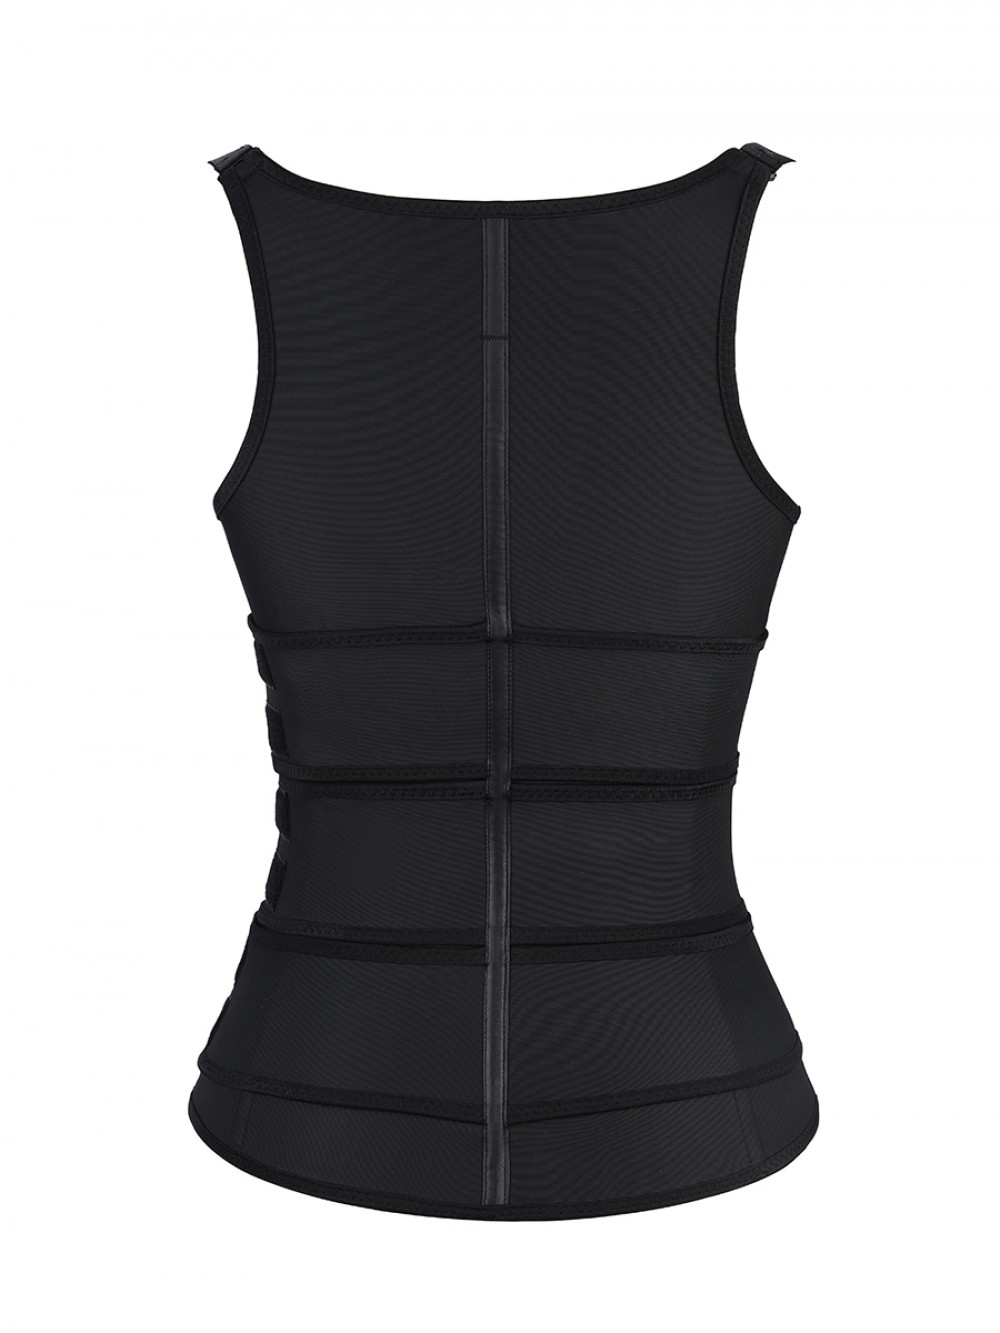 Black Latex Vest Shaper Adjustable Strap Zipper Abdominal Control